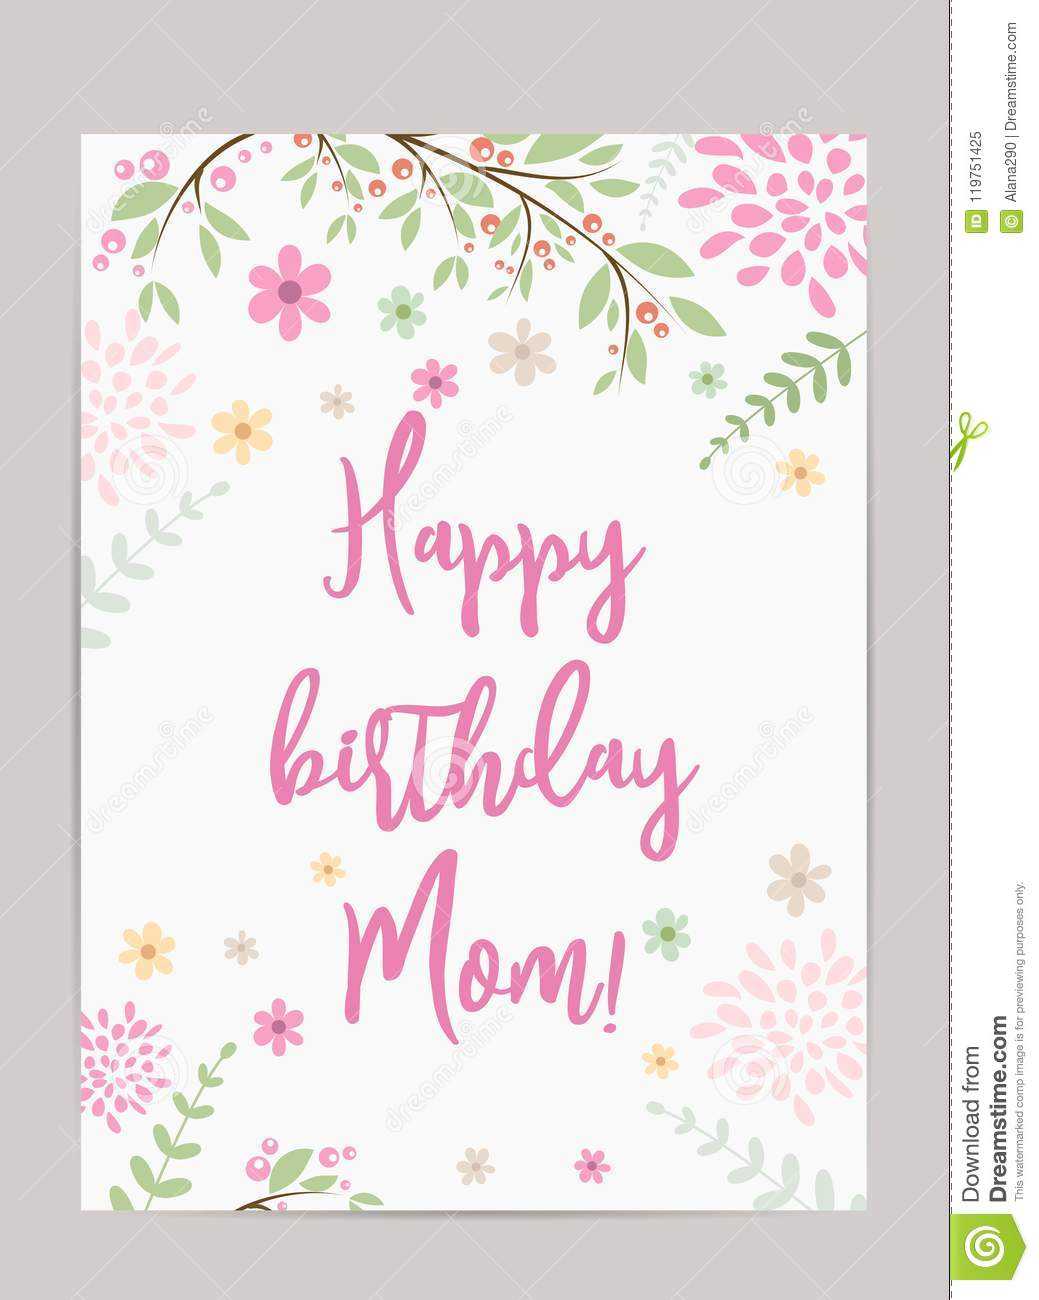 Happy Birthday Mom! Greeting Card Stock Vector In Mom Birthday Card Template